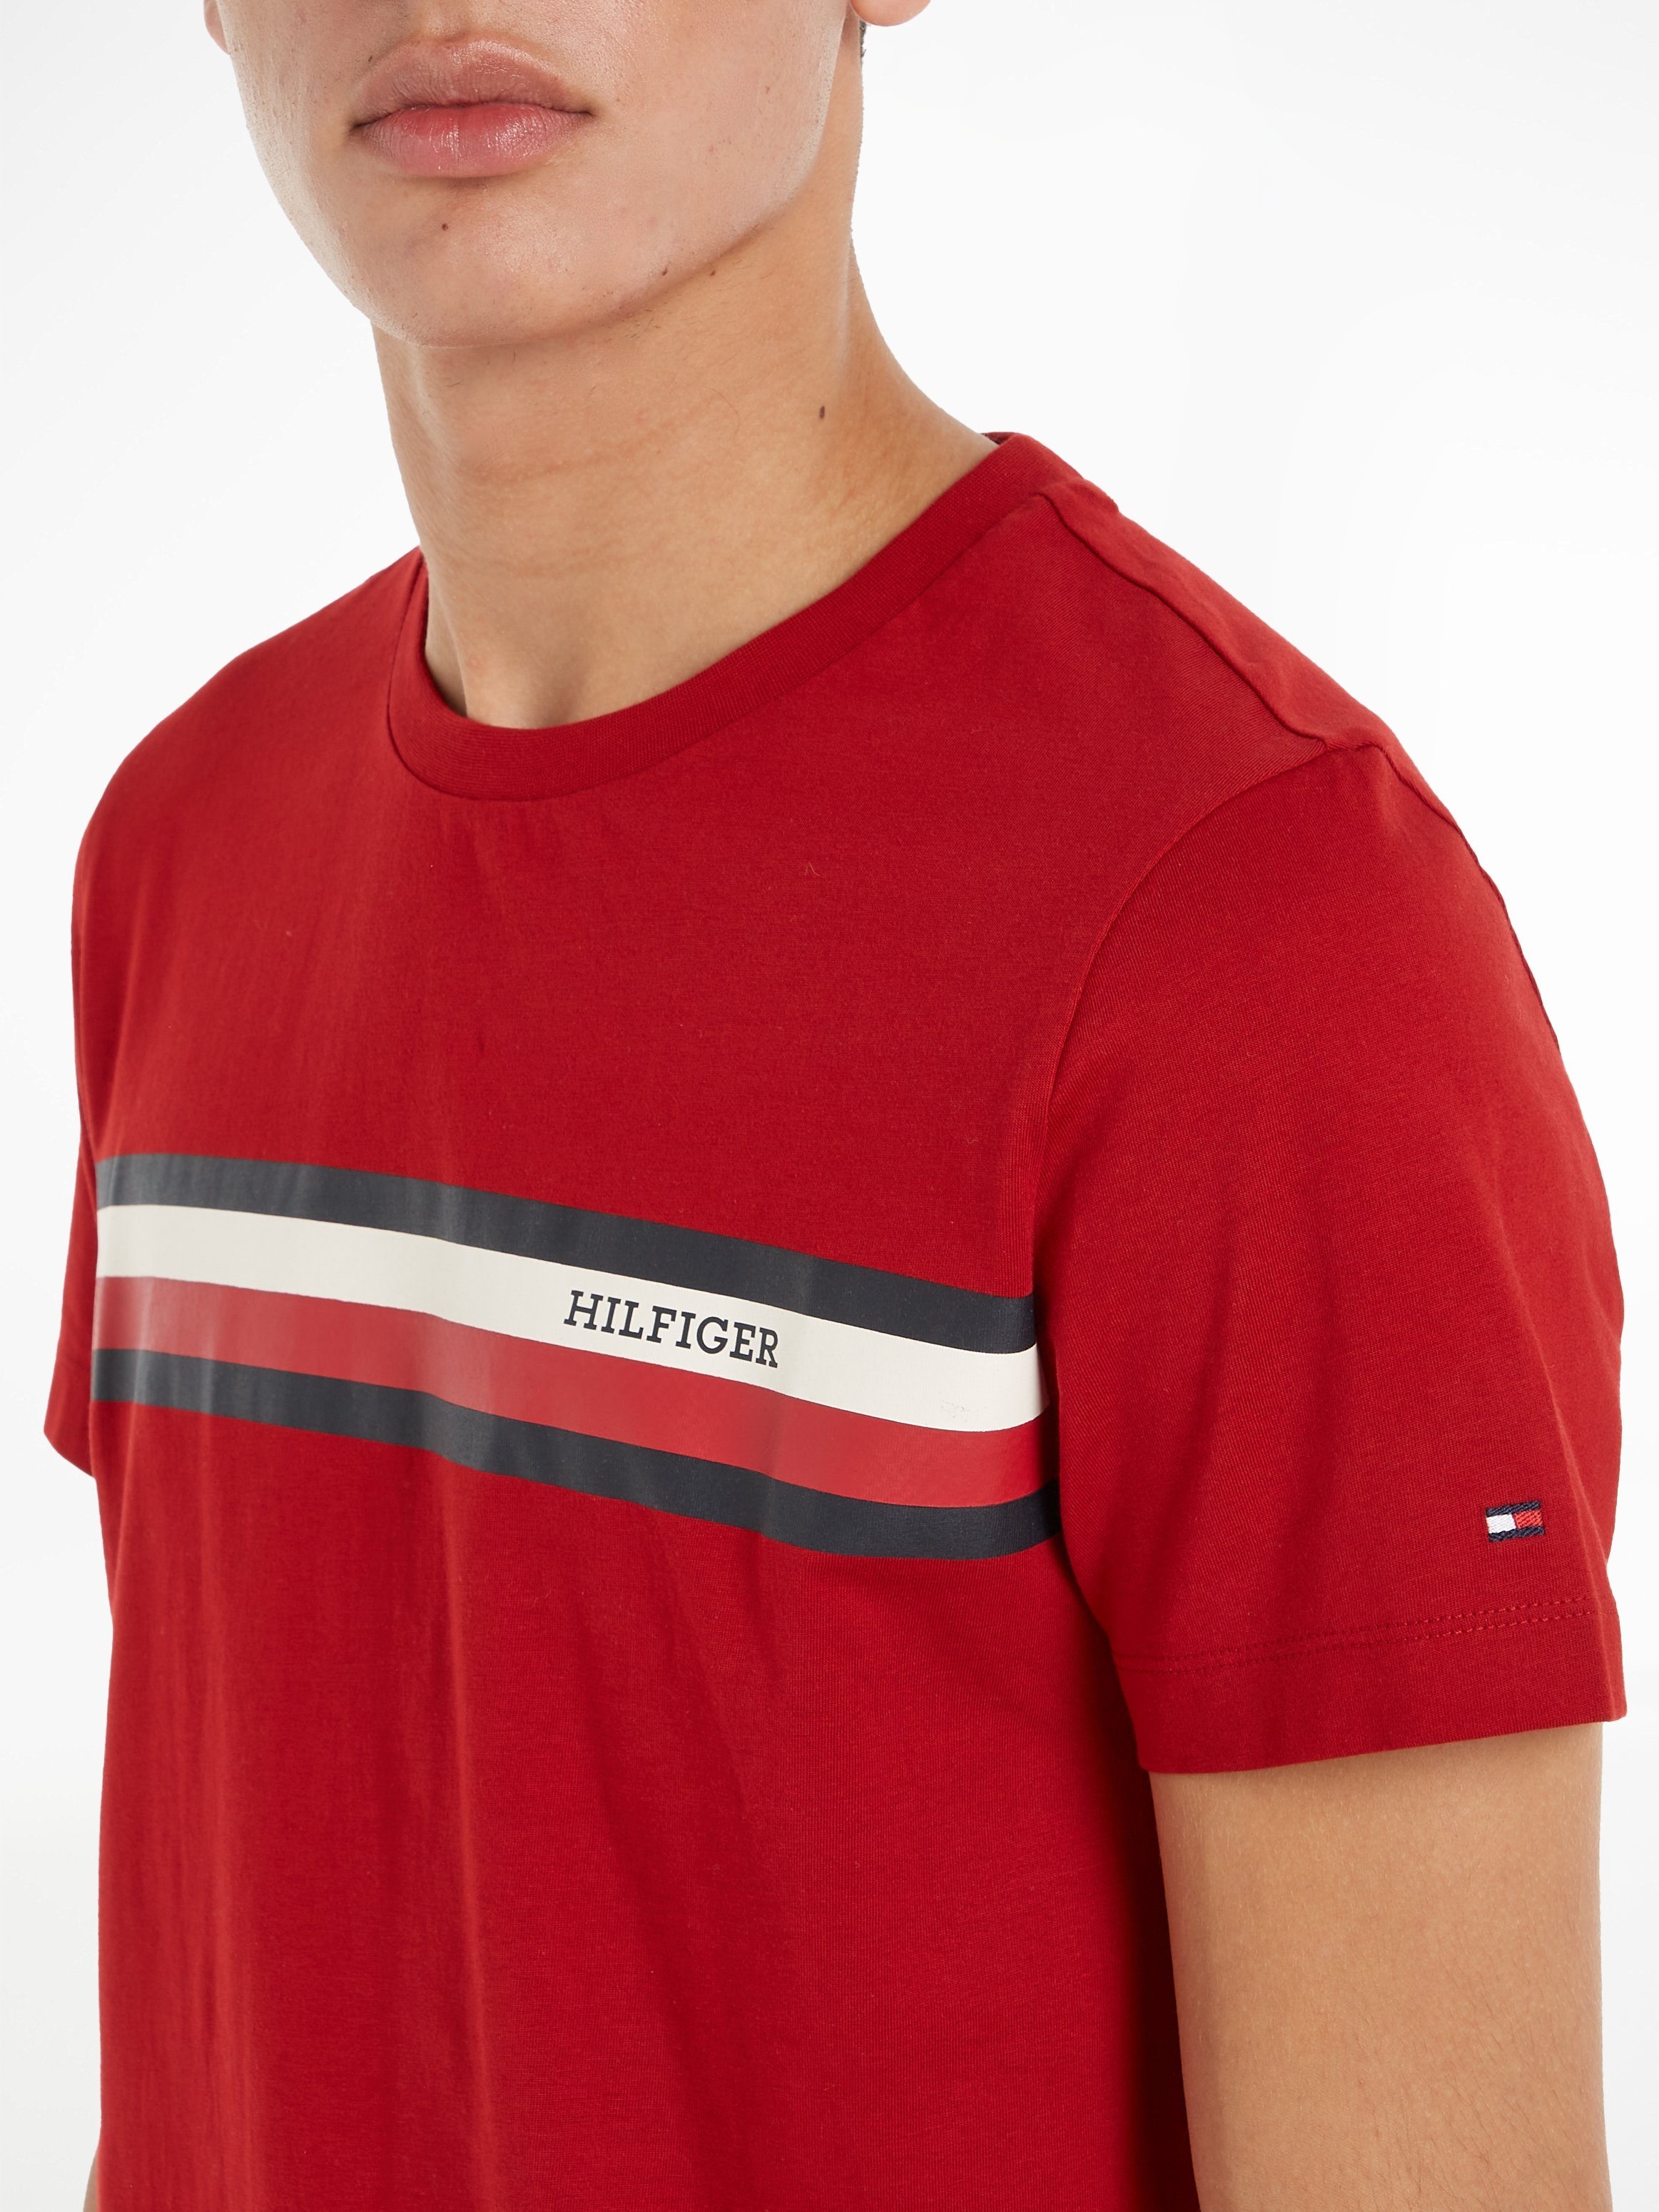 Red Tommy Hilfiger STRIPE Arizona MONOTYPE TEE T-Shirt CHEST RWB